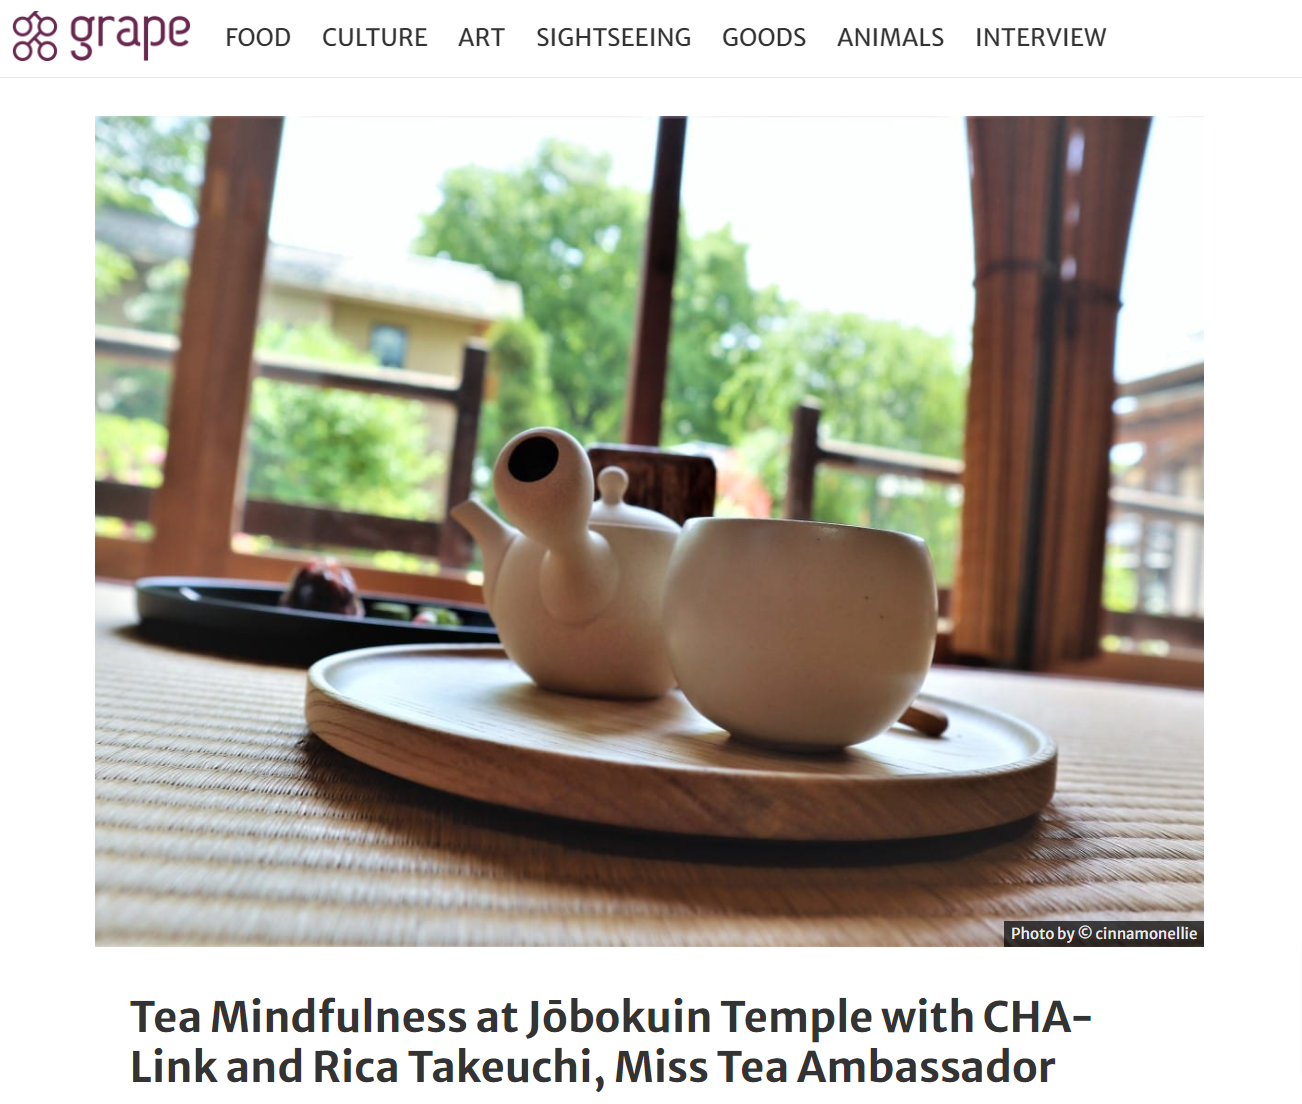 Tea Mindfulness at Jōbokuin Temple with CHA-Link and Rica Takeuchi, Miss Tea Ambassador